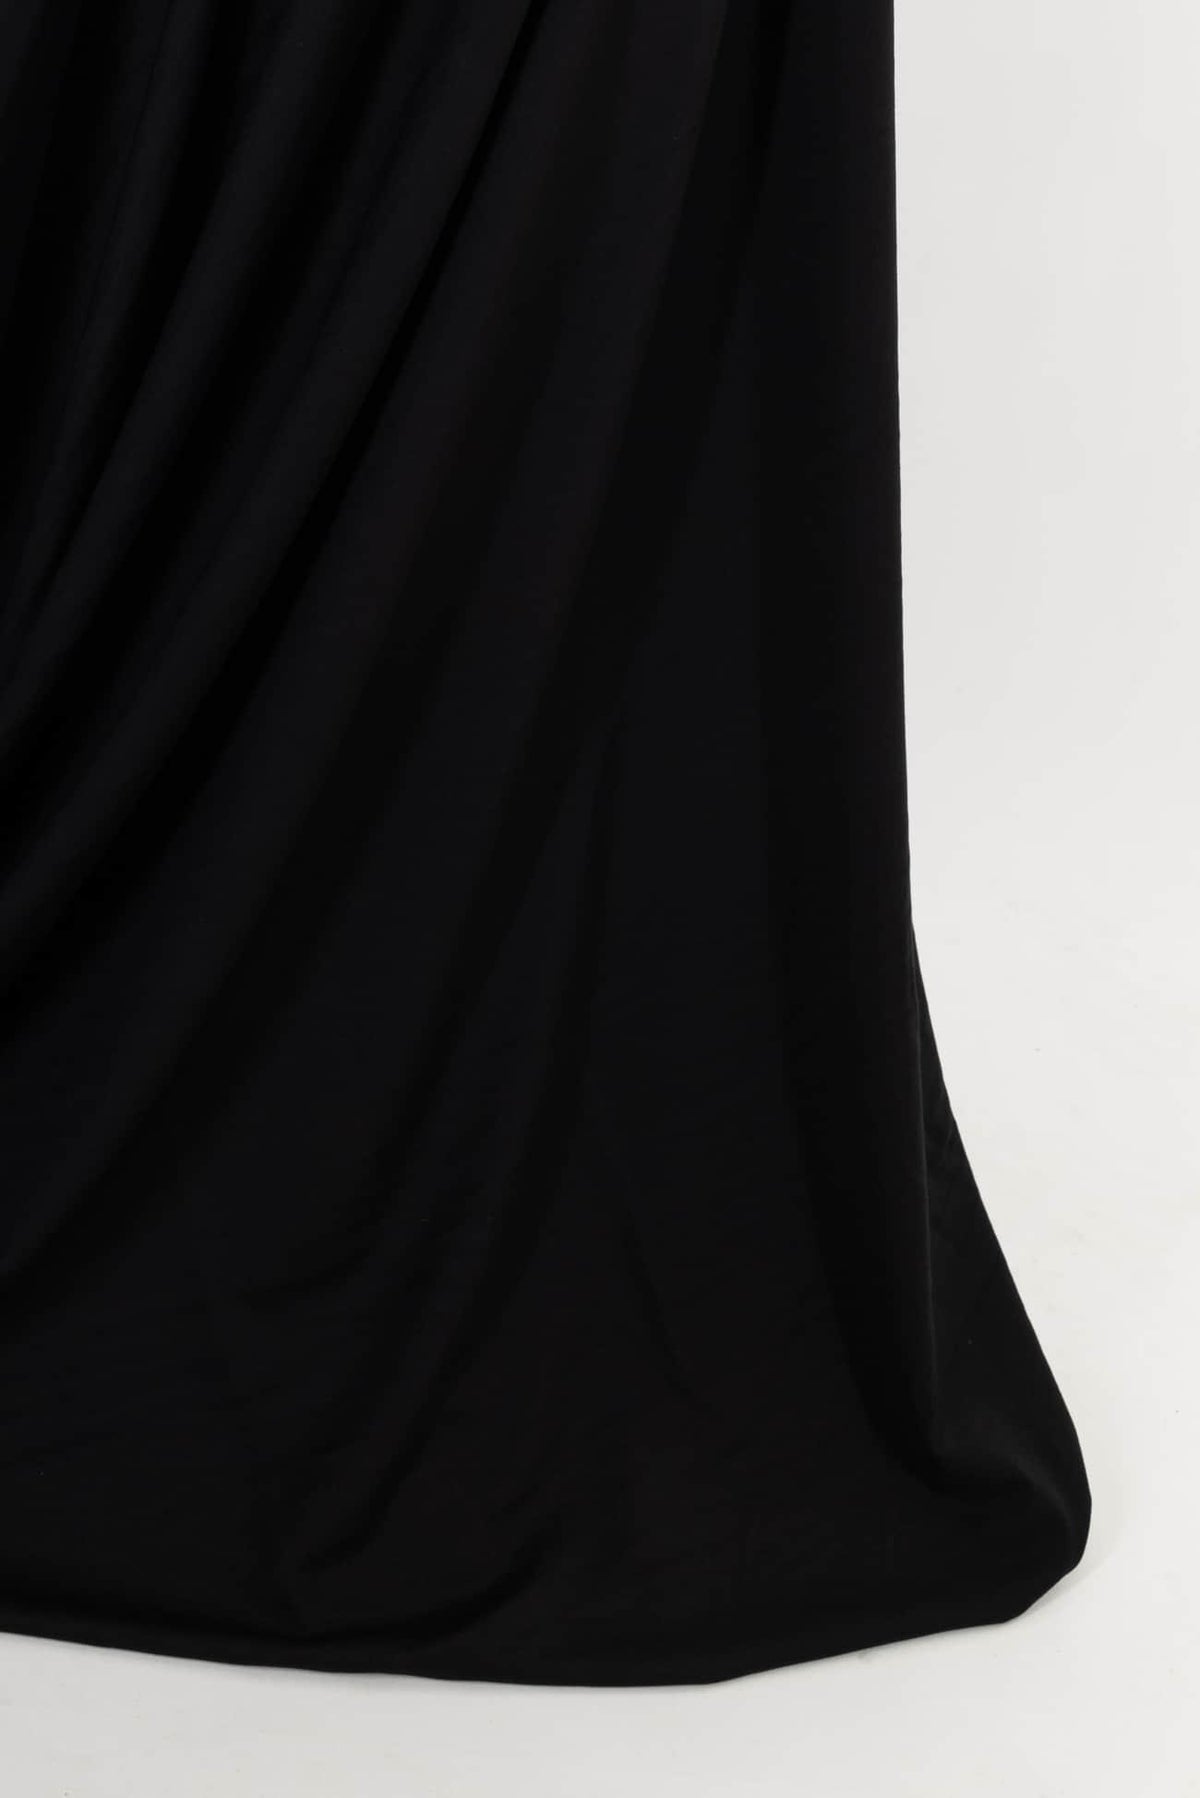 Black Licorice USA Ponte Knit - Marcy Tilton Fabrics